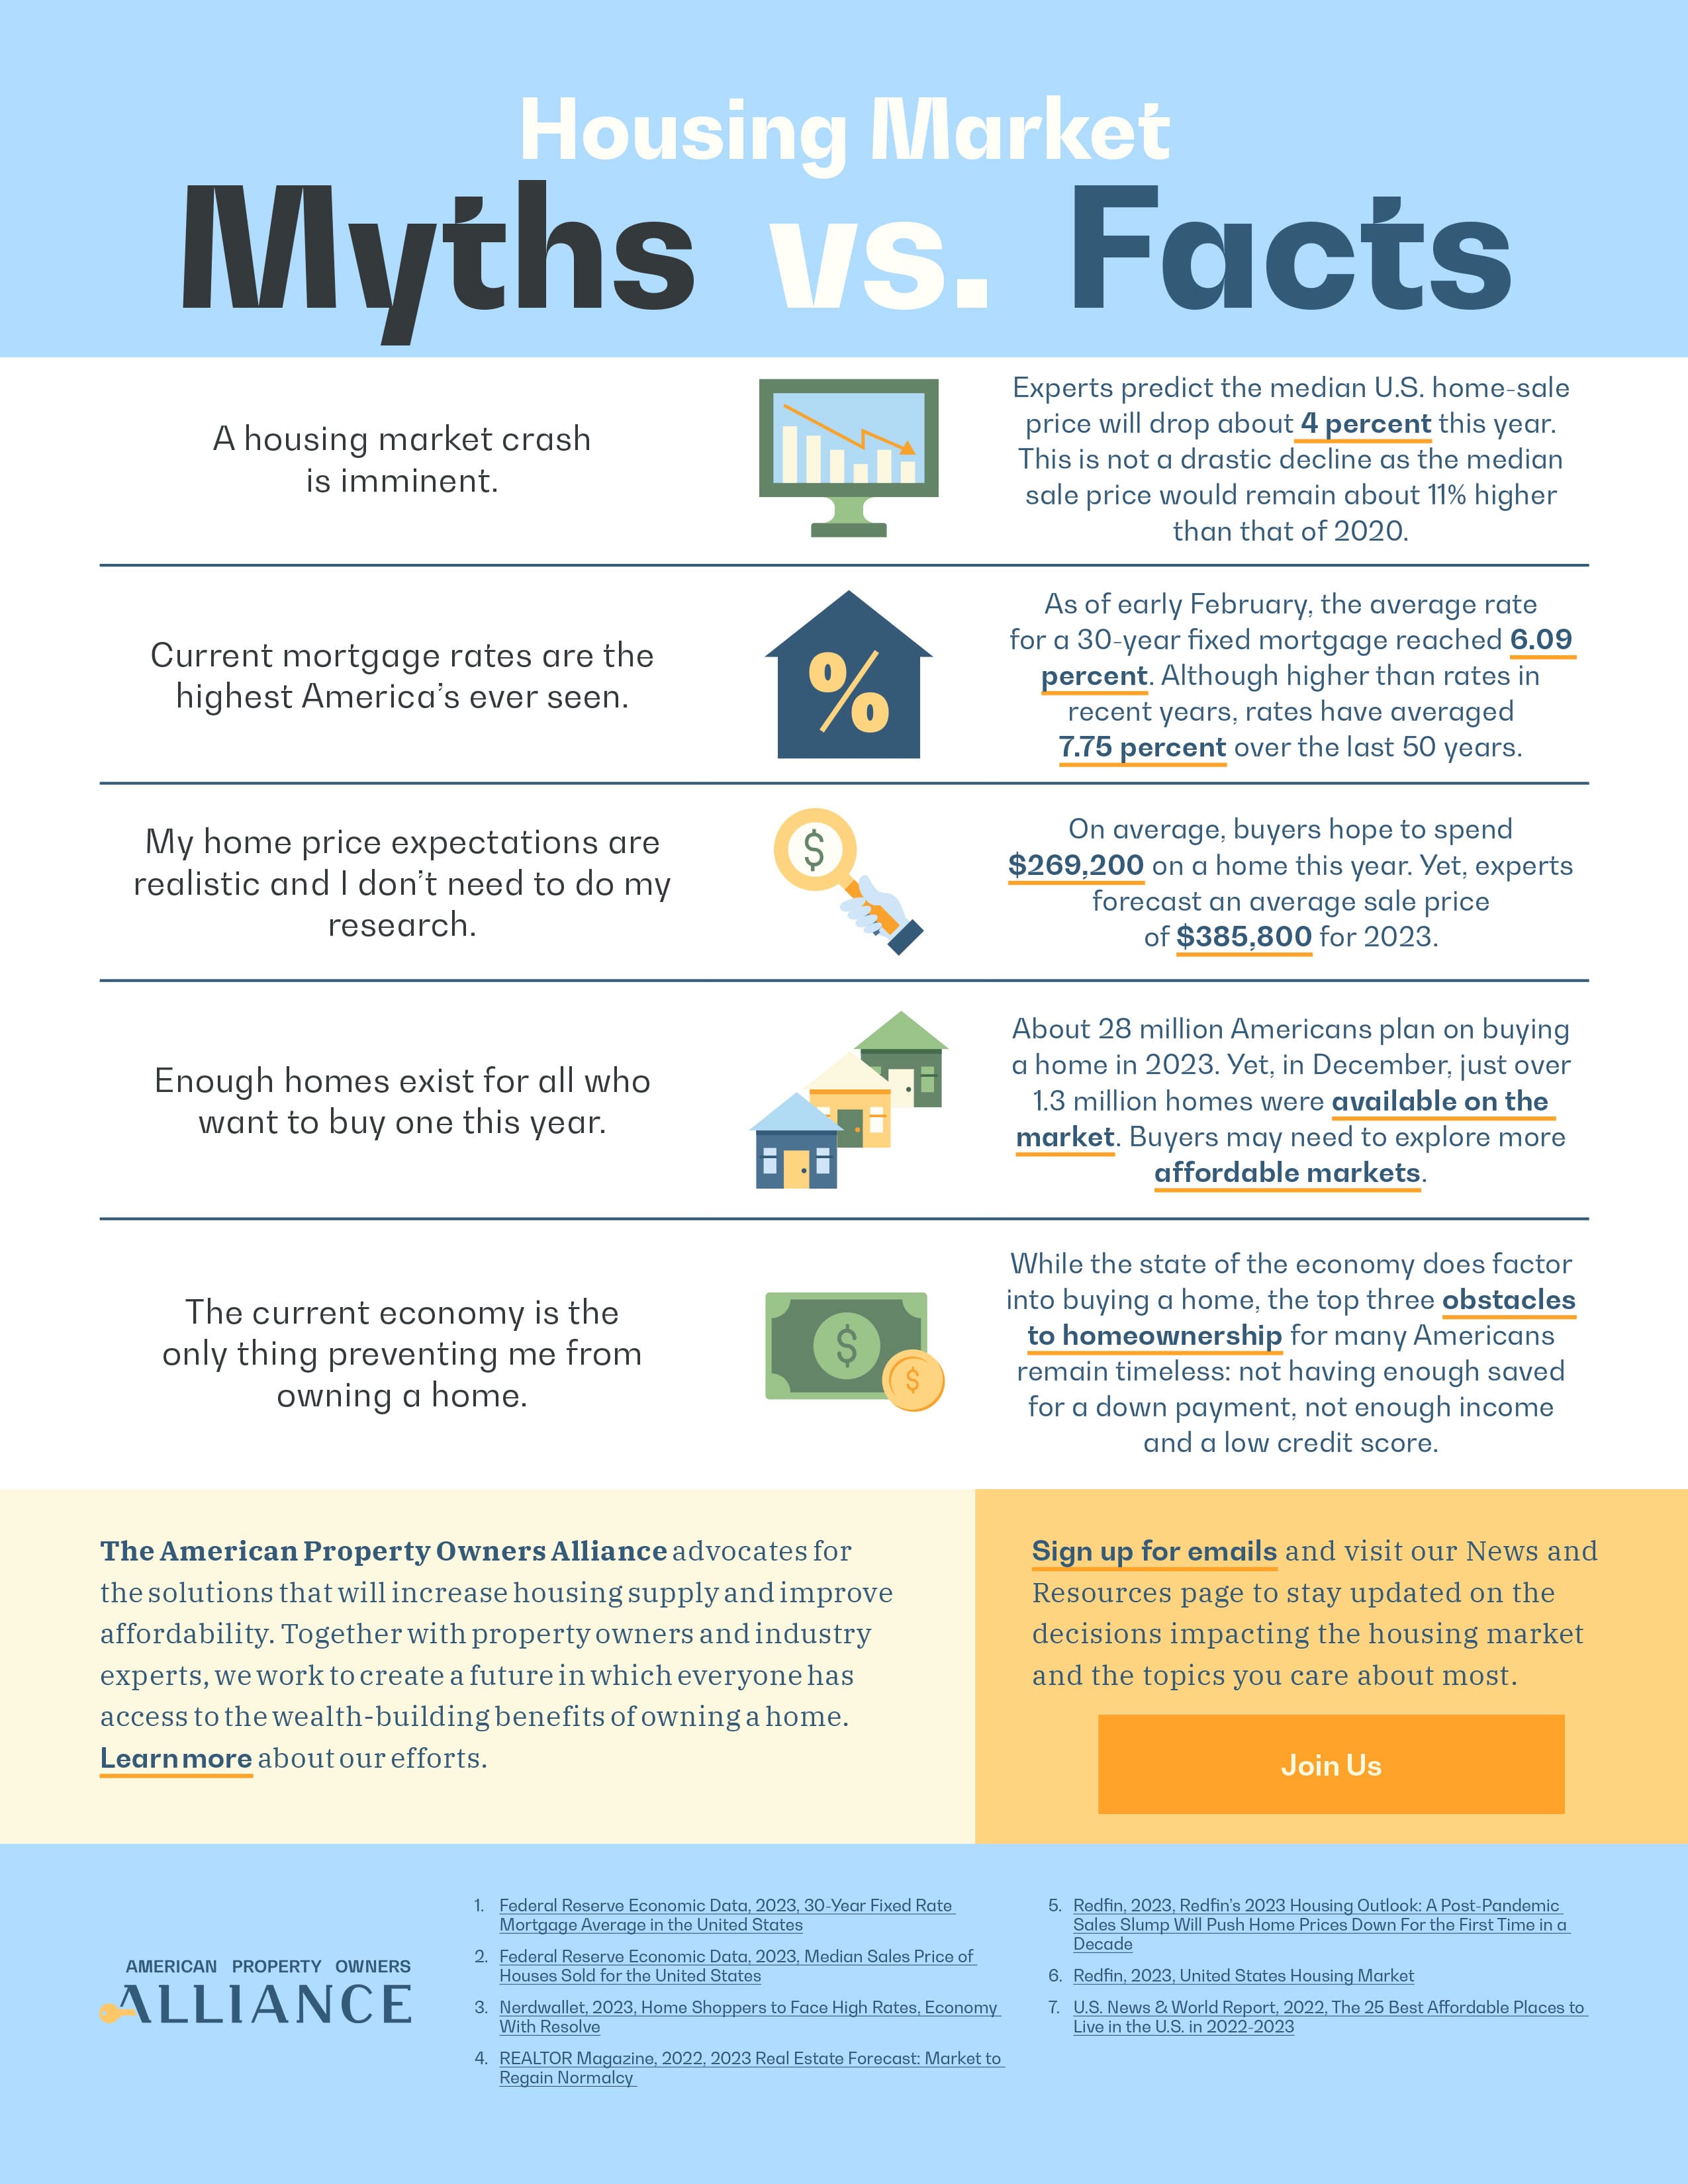 Market Myths vs Facts